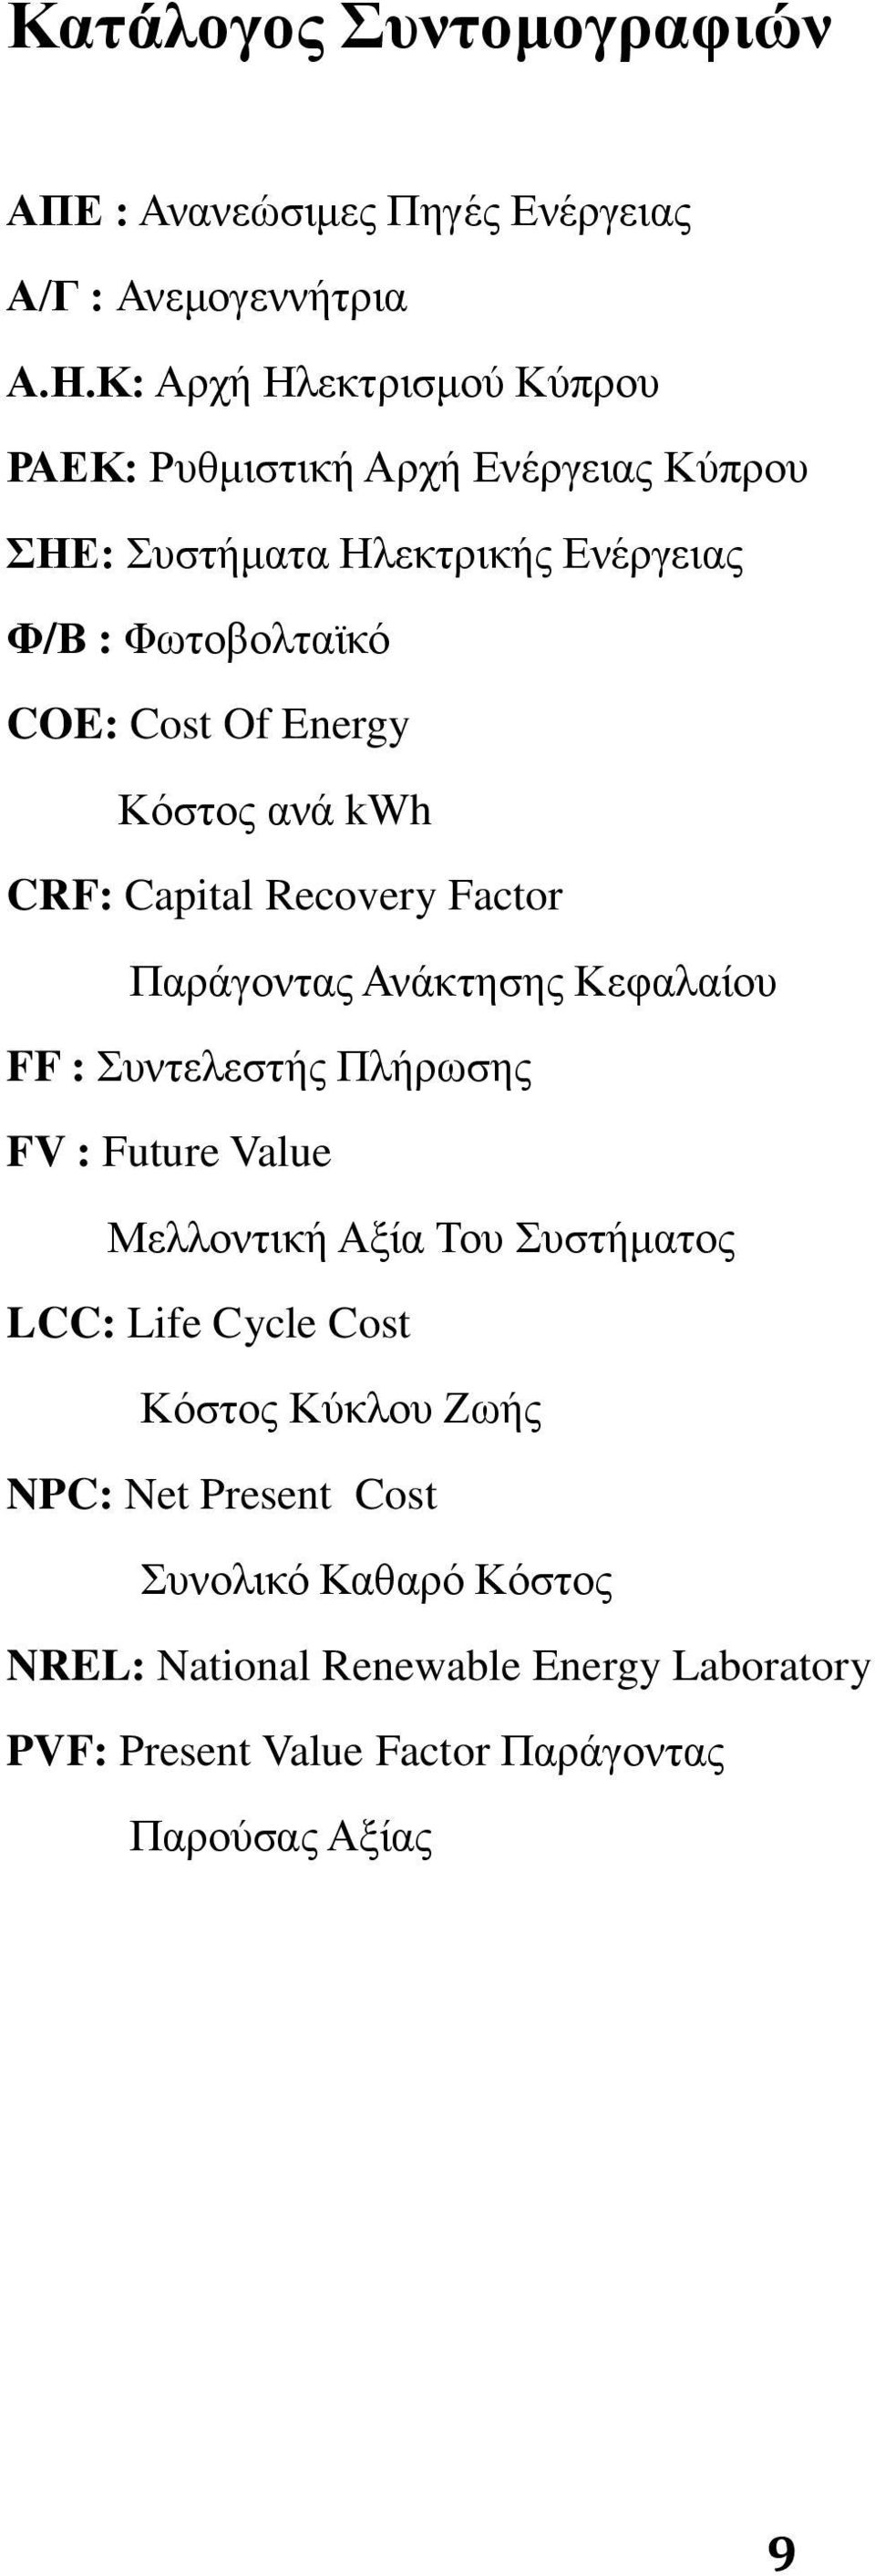 Energy Κόστος ανά kwh CRF: Capital Recovery Factor Παράγοντας Ανάκτησης Κεφαλαίου FF : Συντελεστής Πλήρωσης FV : Future Value Μελλοντική